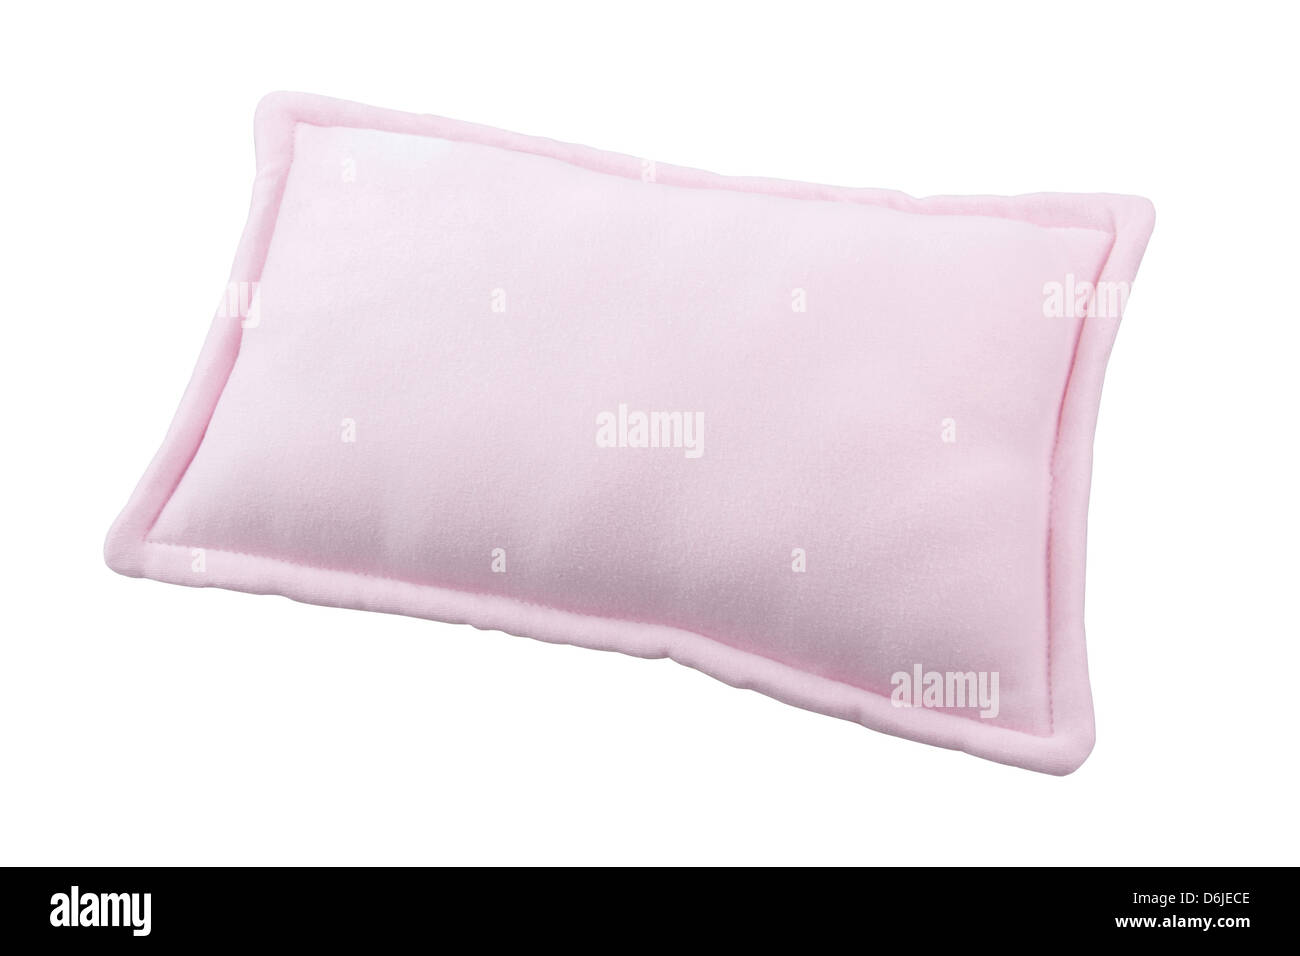 Almohada o almohada pequeña para bebé Imágenes recortadas de stock